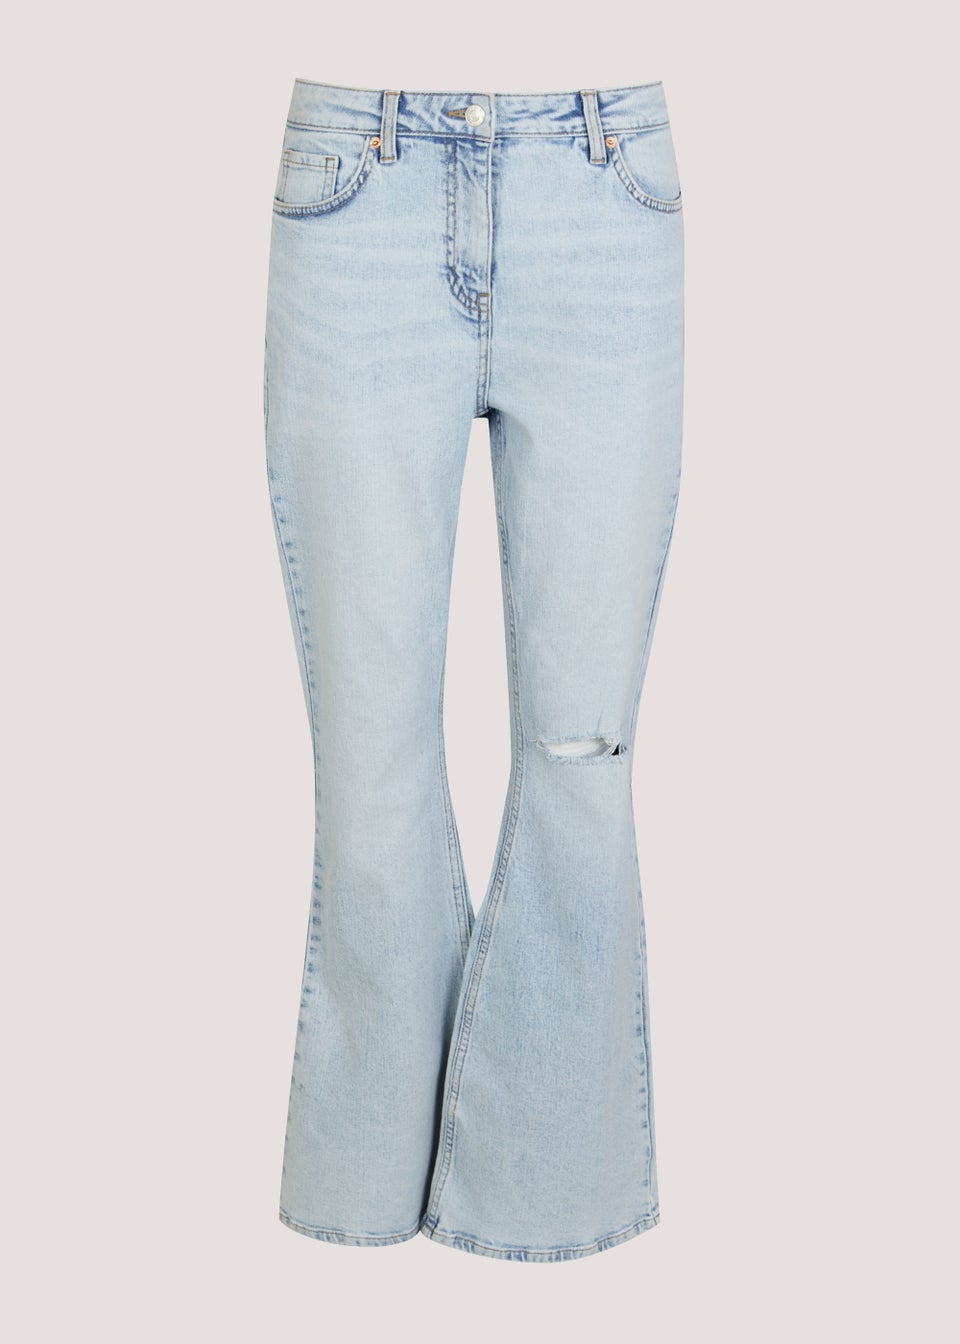 Papaya Petite Light Wash Bleached Skinny Flared Distressed Jeans - Matalan